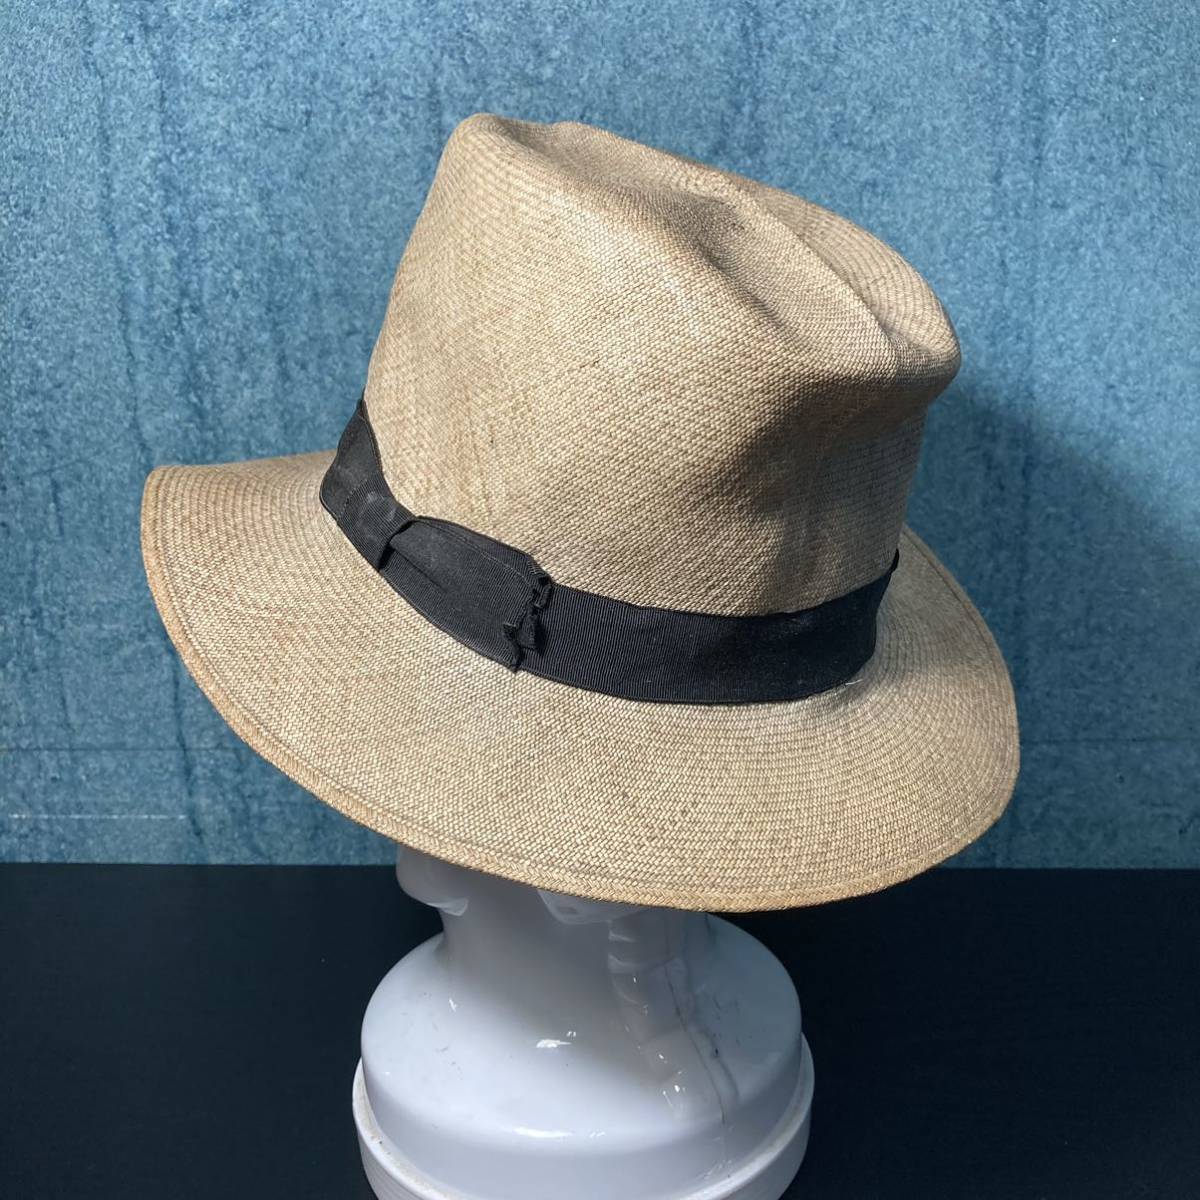  Vintage панама ma шляпа соломинка шляпа Tokyo производства Vintage Panama hat straw hat Borsalino Corporation Straw hat made in Tokyo SF&company